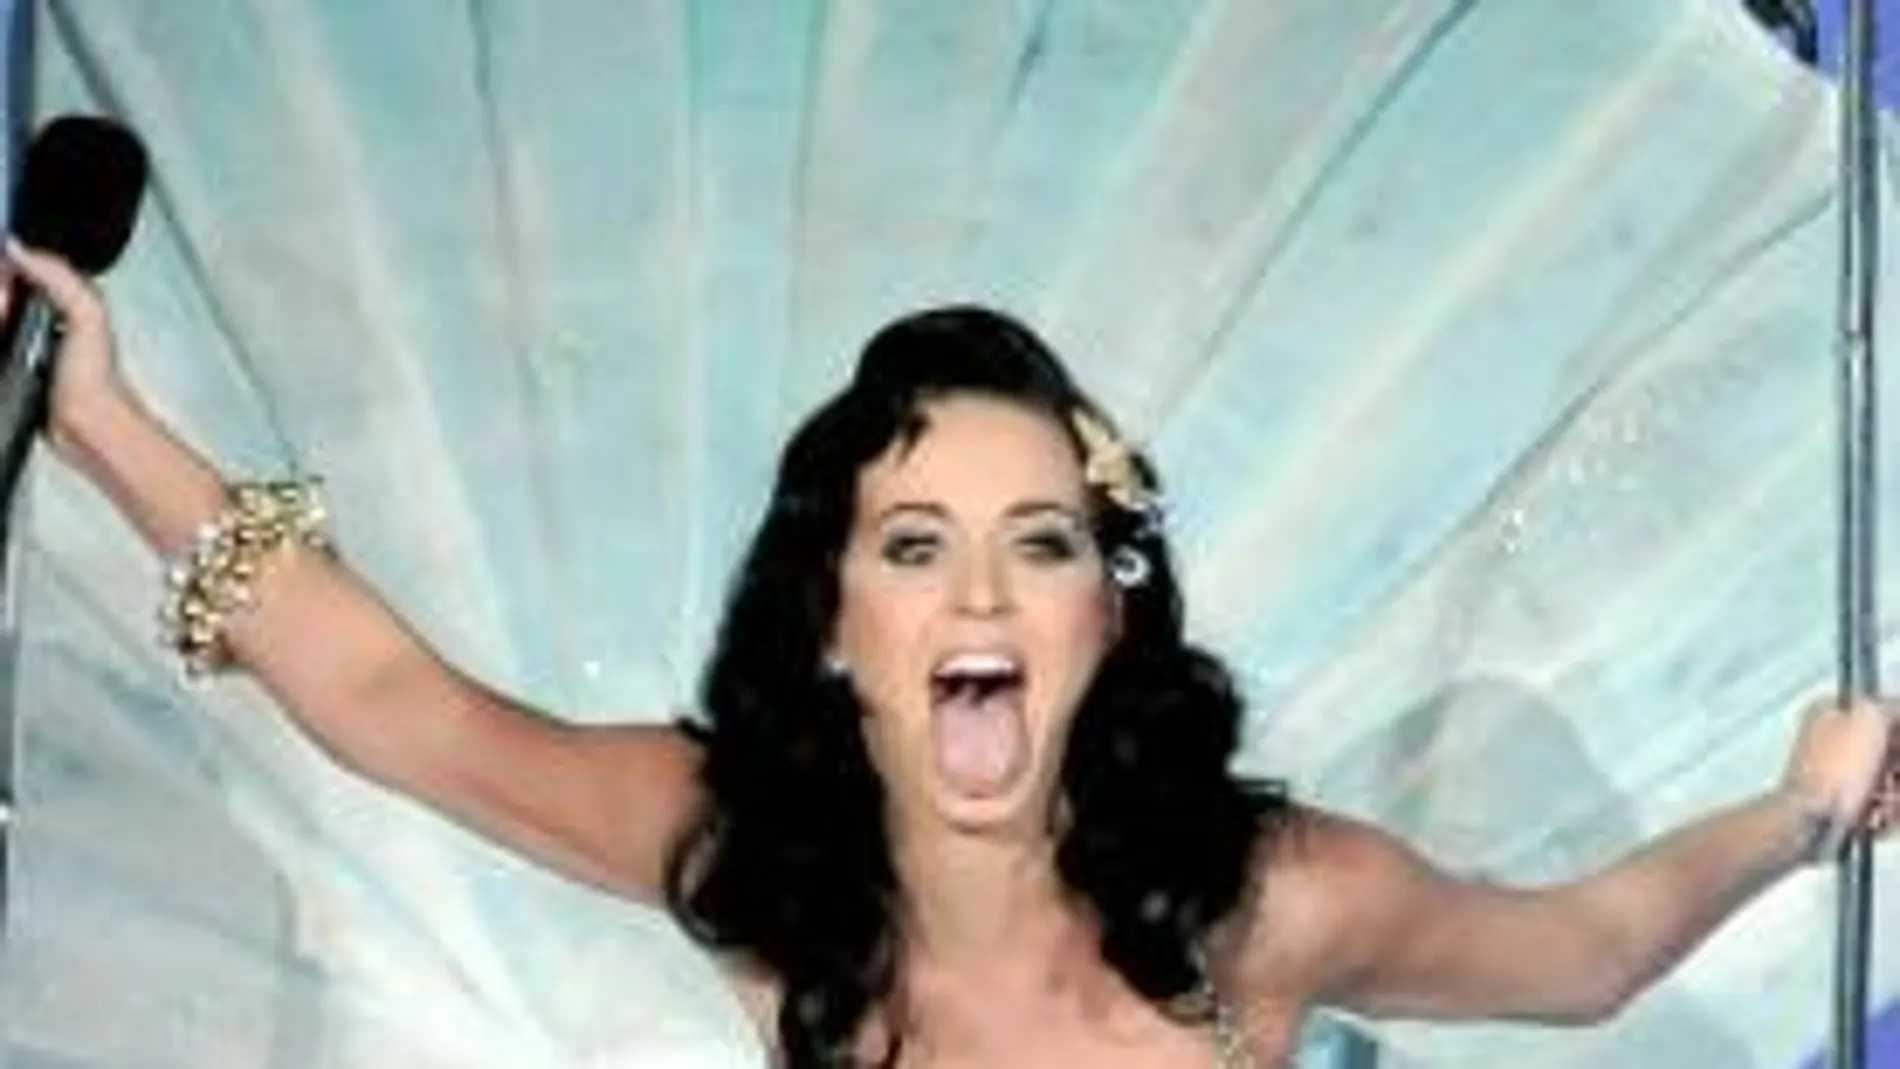 Katy Perry llena hoy de adolescentes el Palau Sant Jordi en el Festival U18